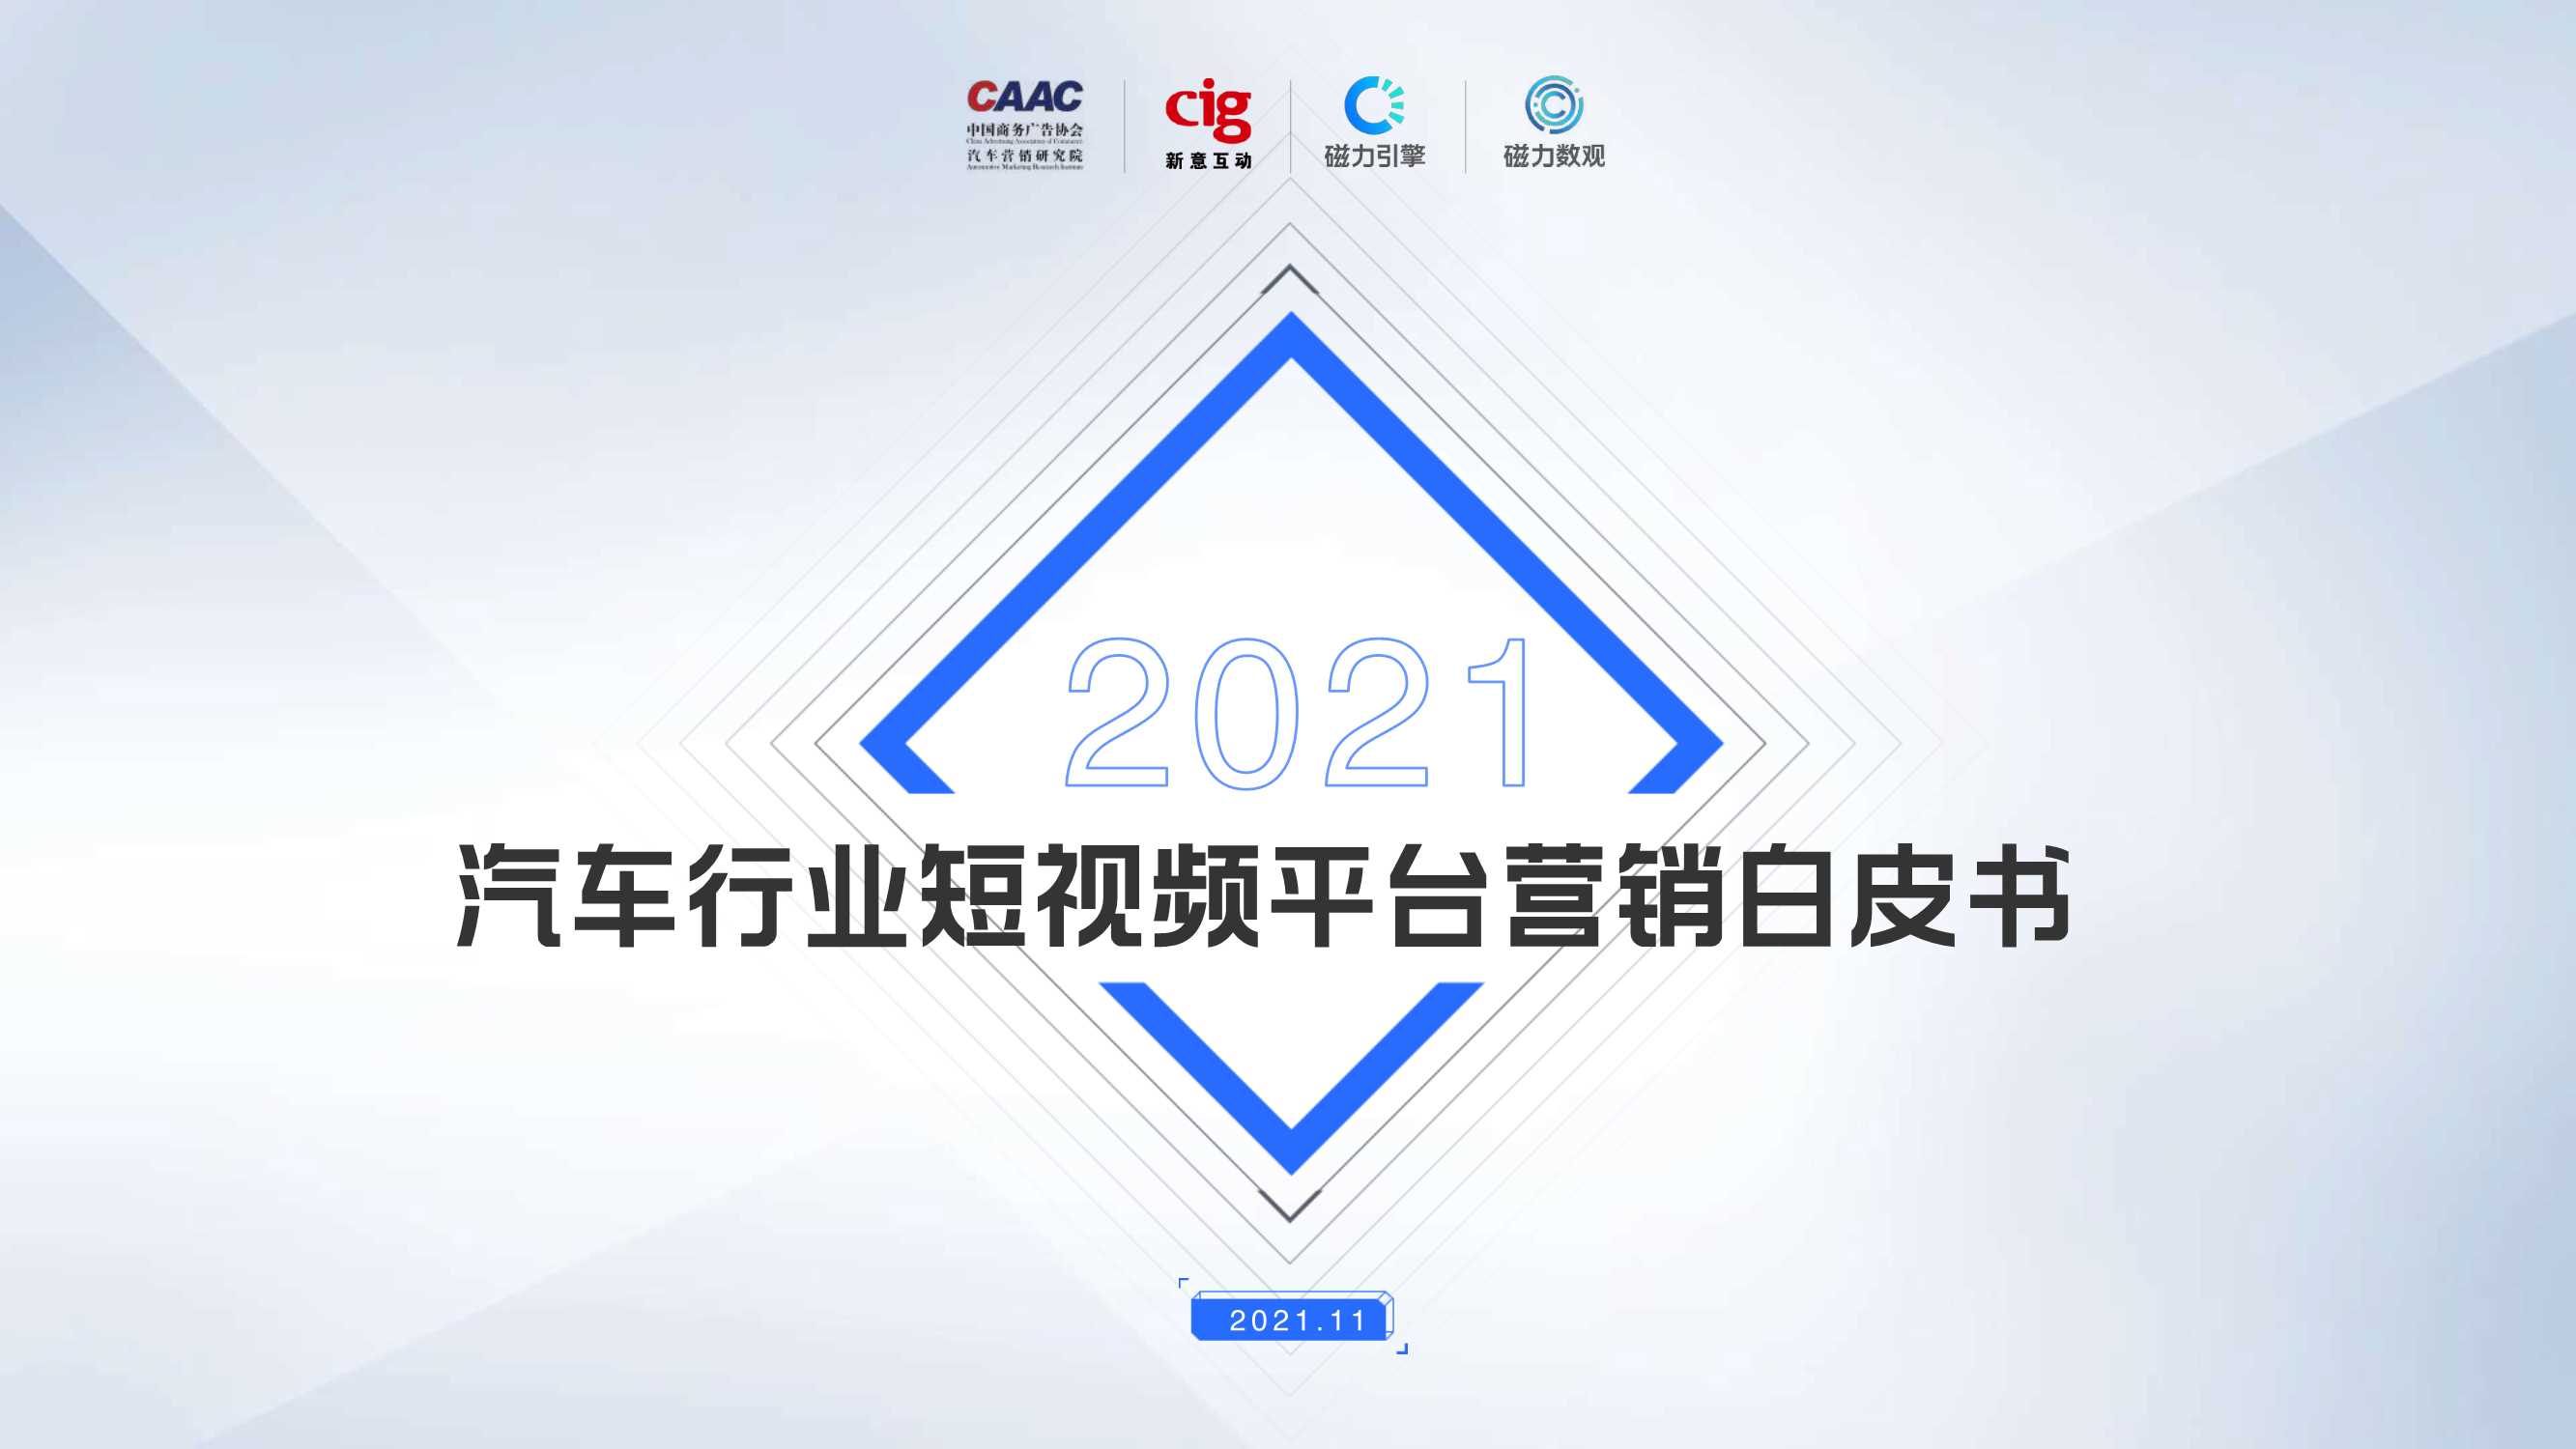 CAAC&磁力引擎&新意互动-2021汽车行业短视频平台营销白皮书-2021.11-126页